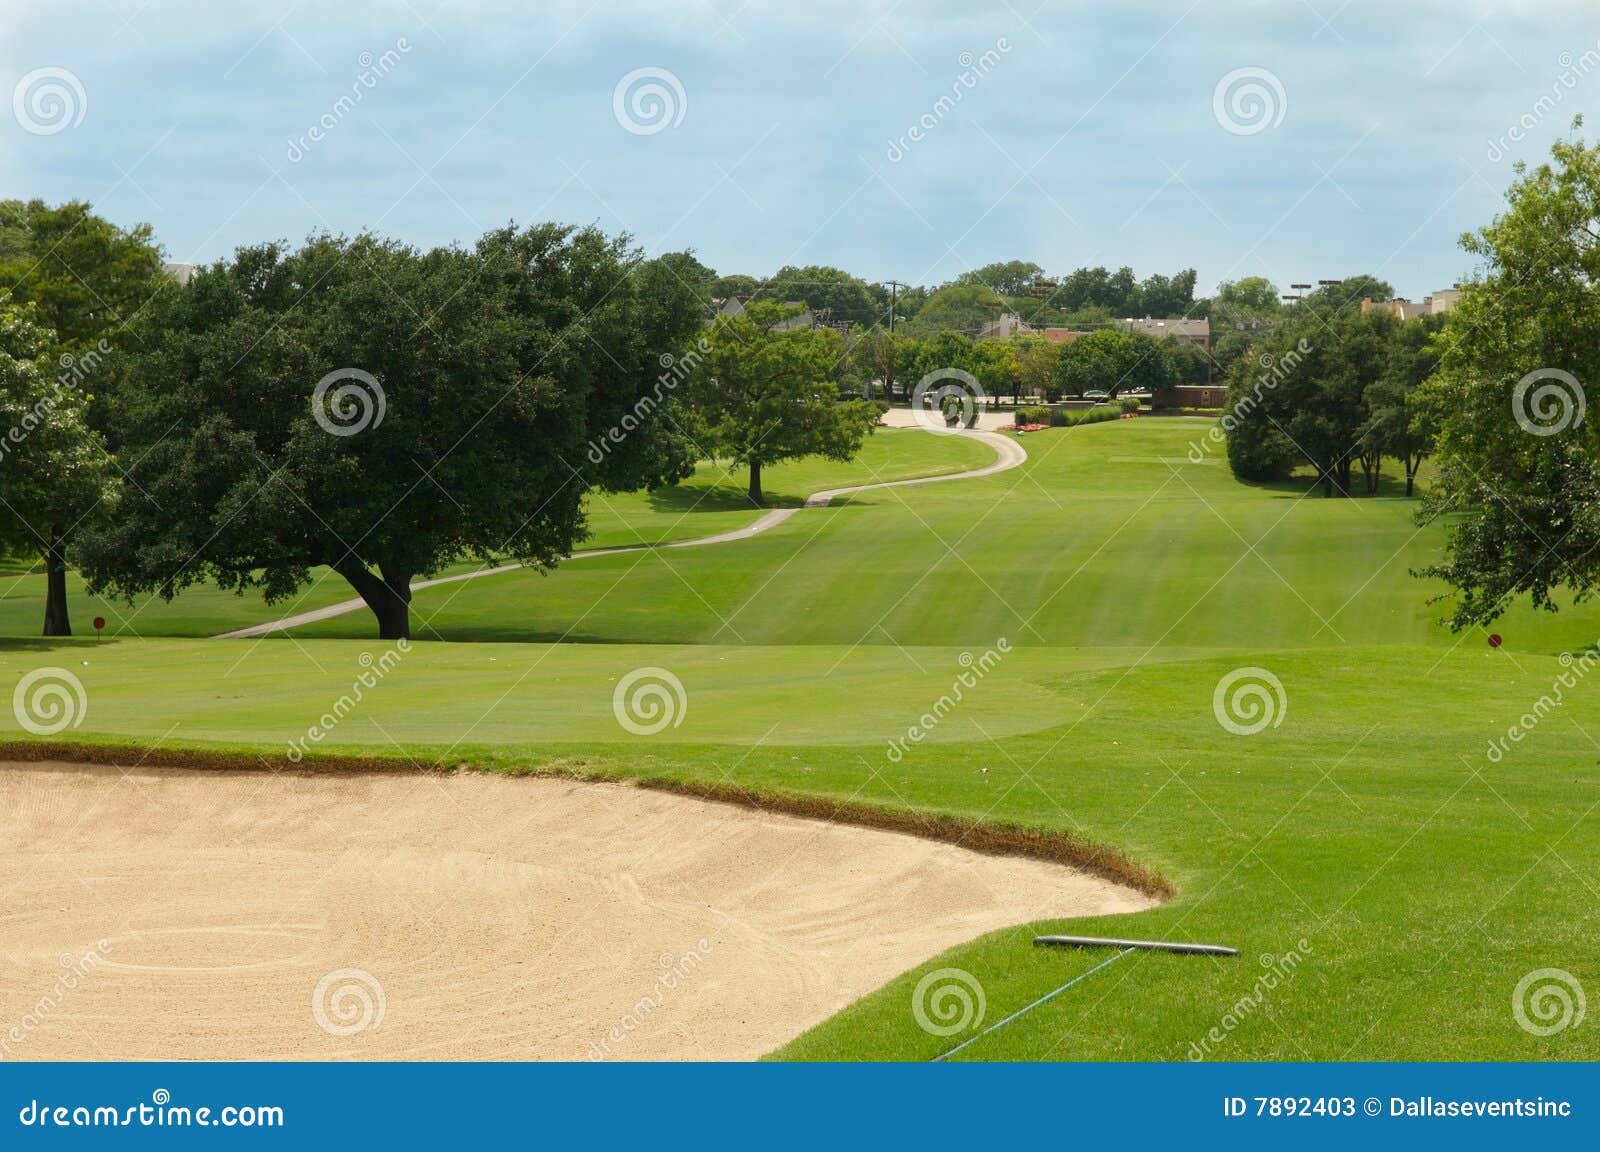 free clipart golf fairway - photo #18